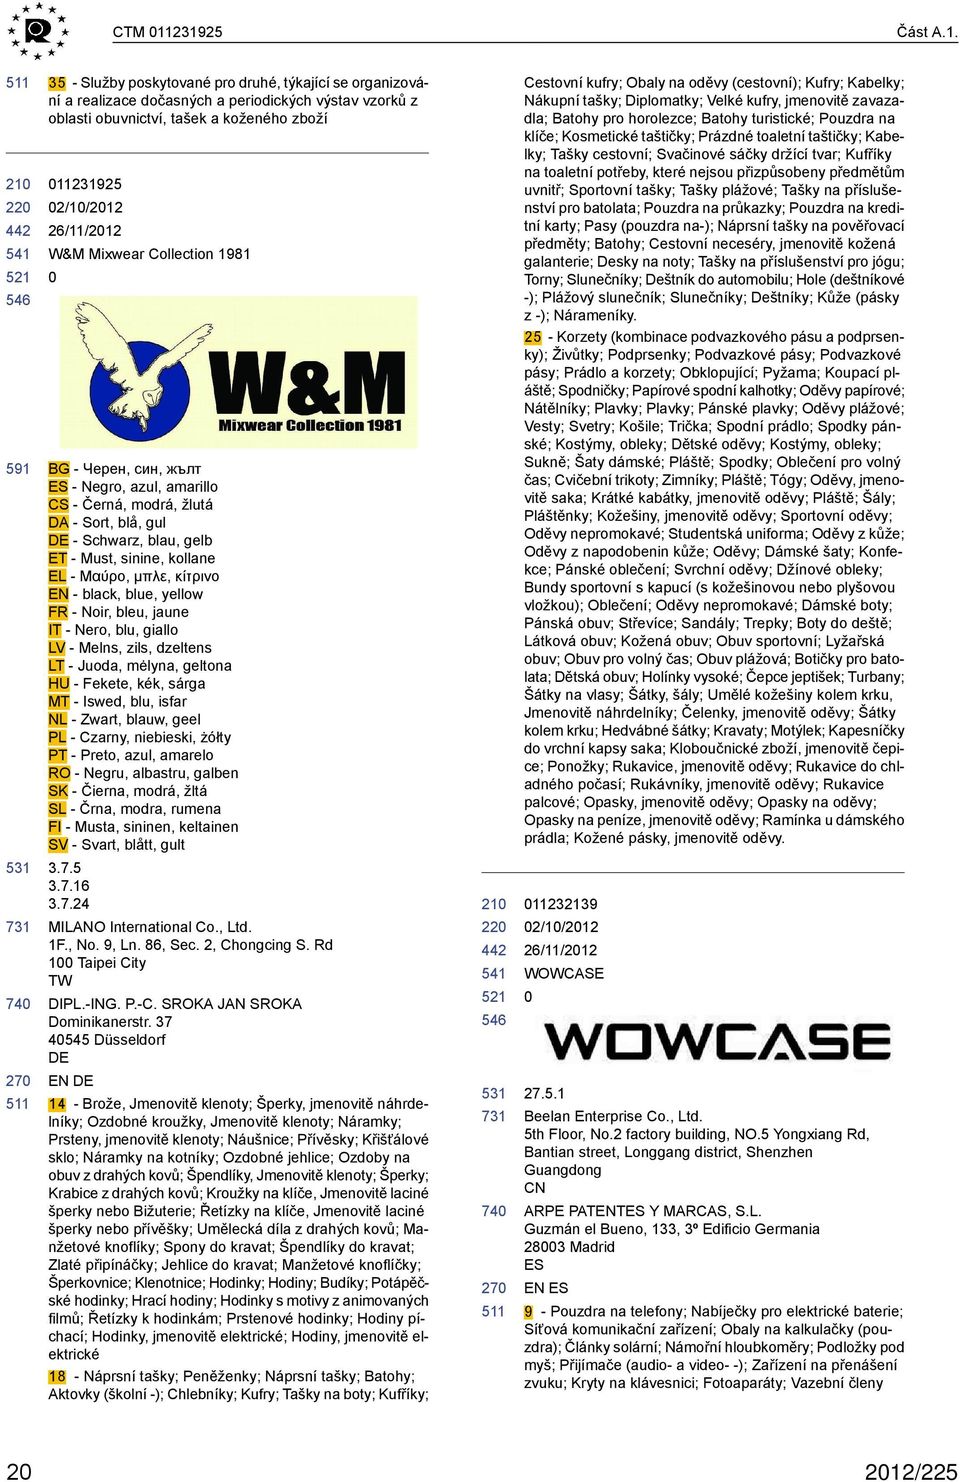 W&M Mixwear Collection 1981 BG - Черен, син, жълт ES - Negro, azul, amarillo CS - Černá, modrá, žlutá DA - Sort, blå, gul - Schwarz, blau, gelb ET - Must, sinine, kollane EL - Μαύρο, μπλε, κίτρινο EN